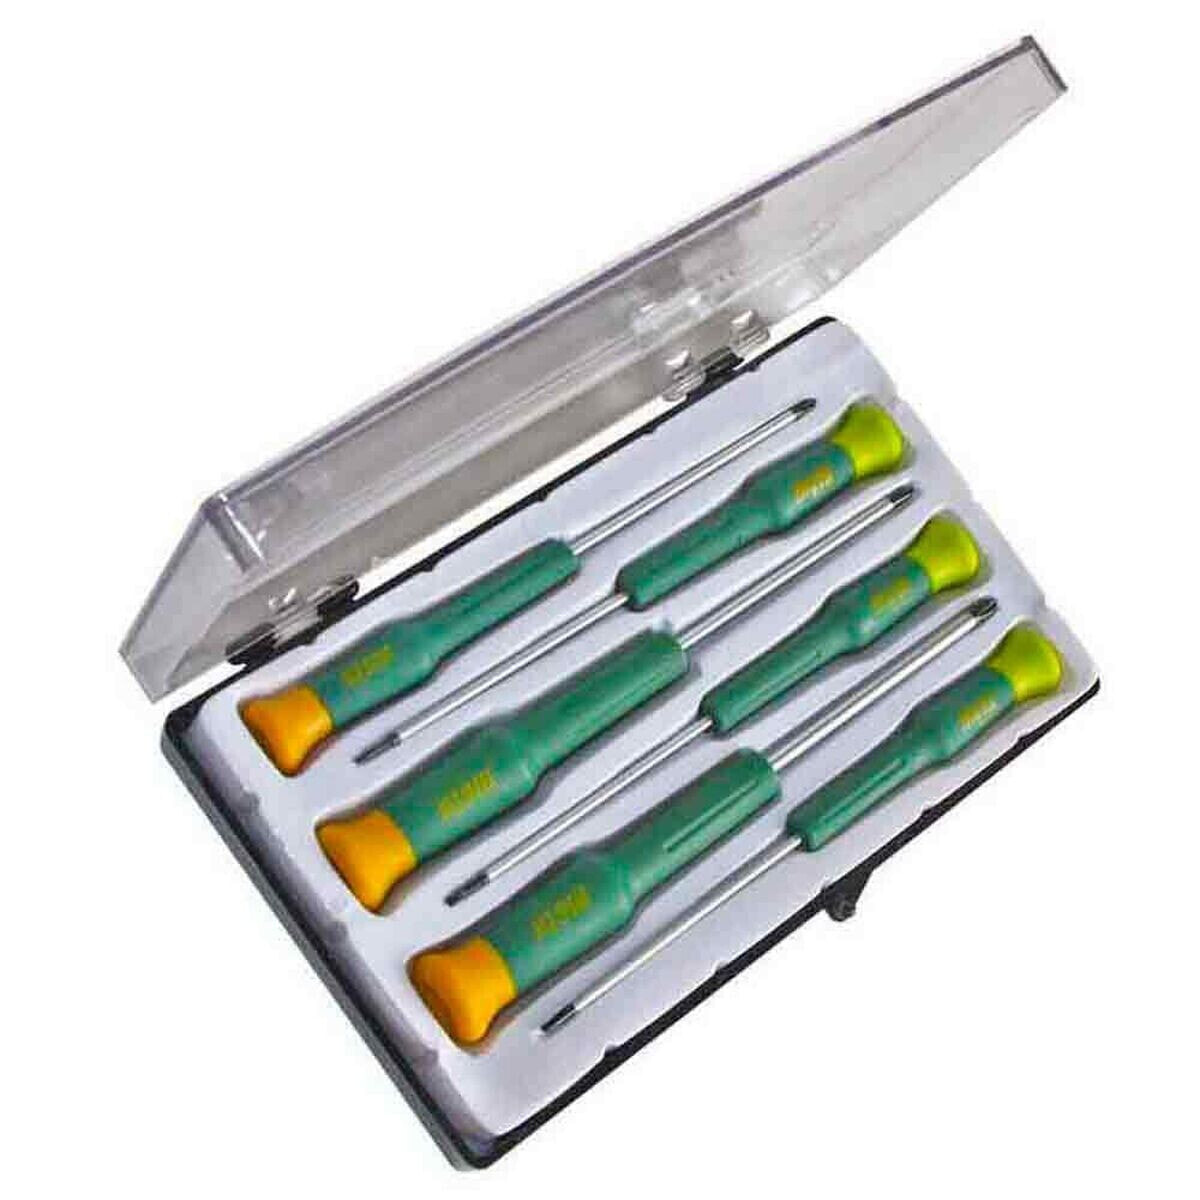 Set of precision screwdrivers Mota DMV pH Flat 2 mm 3